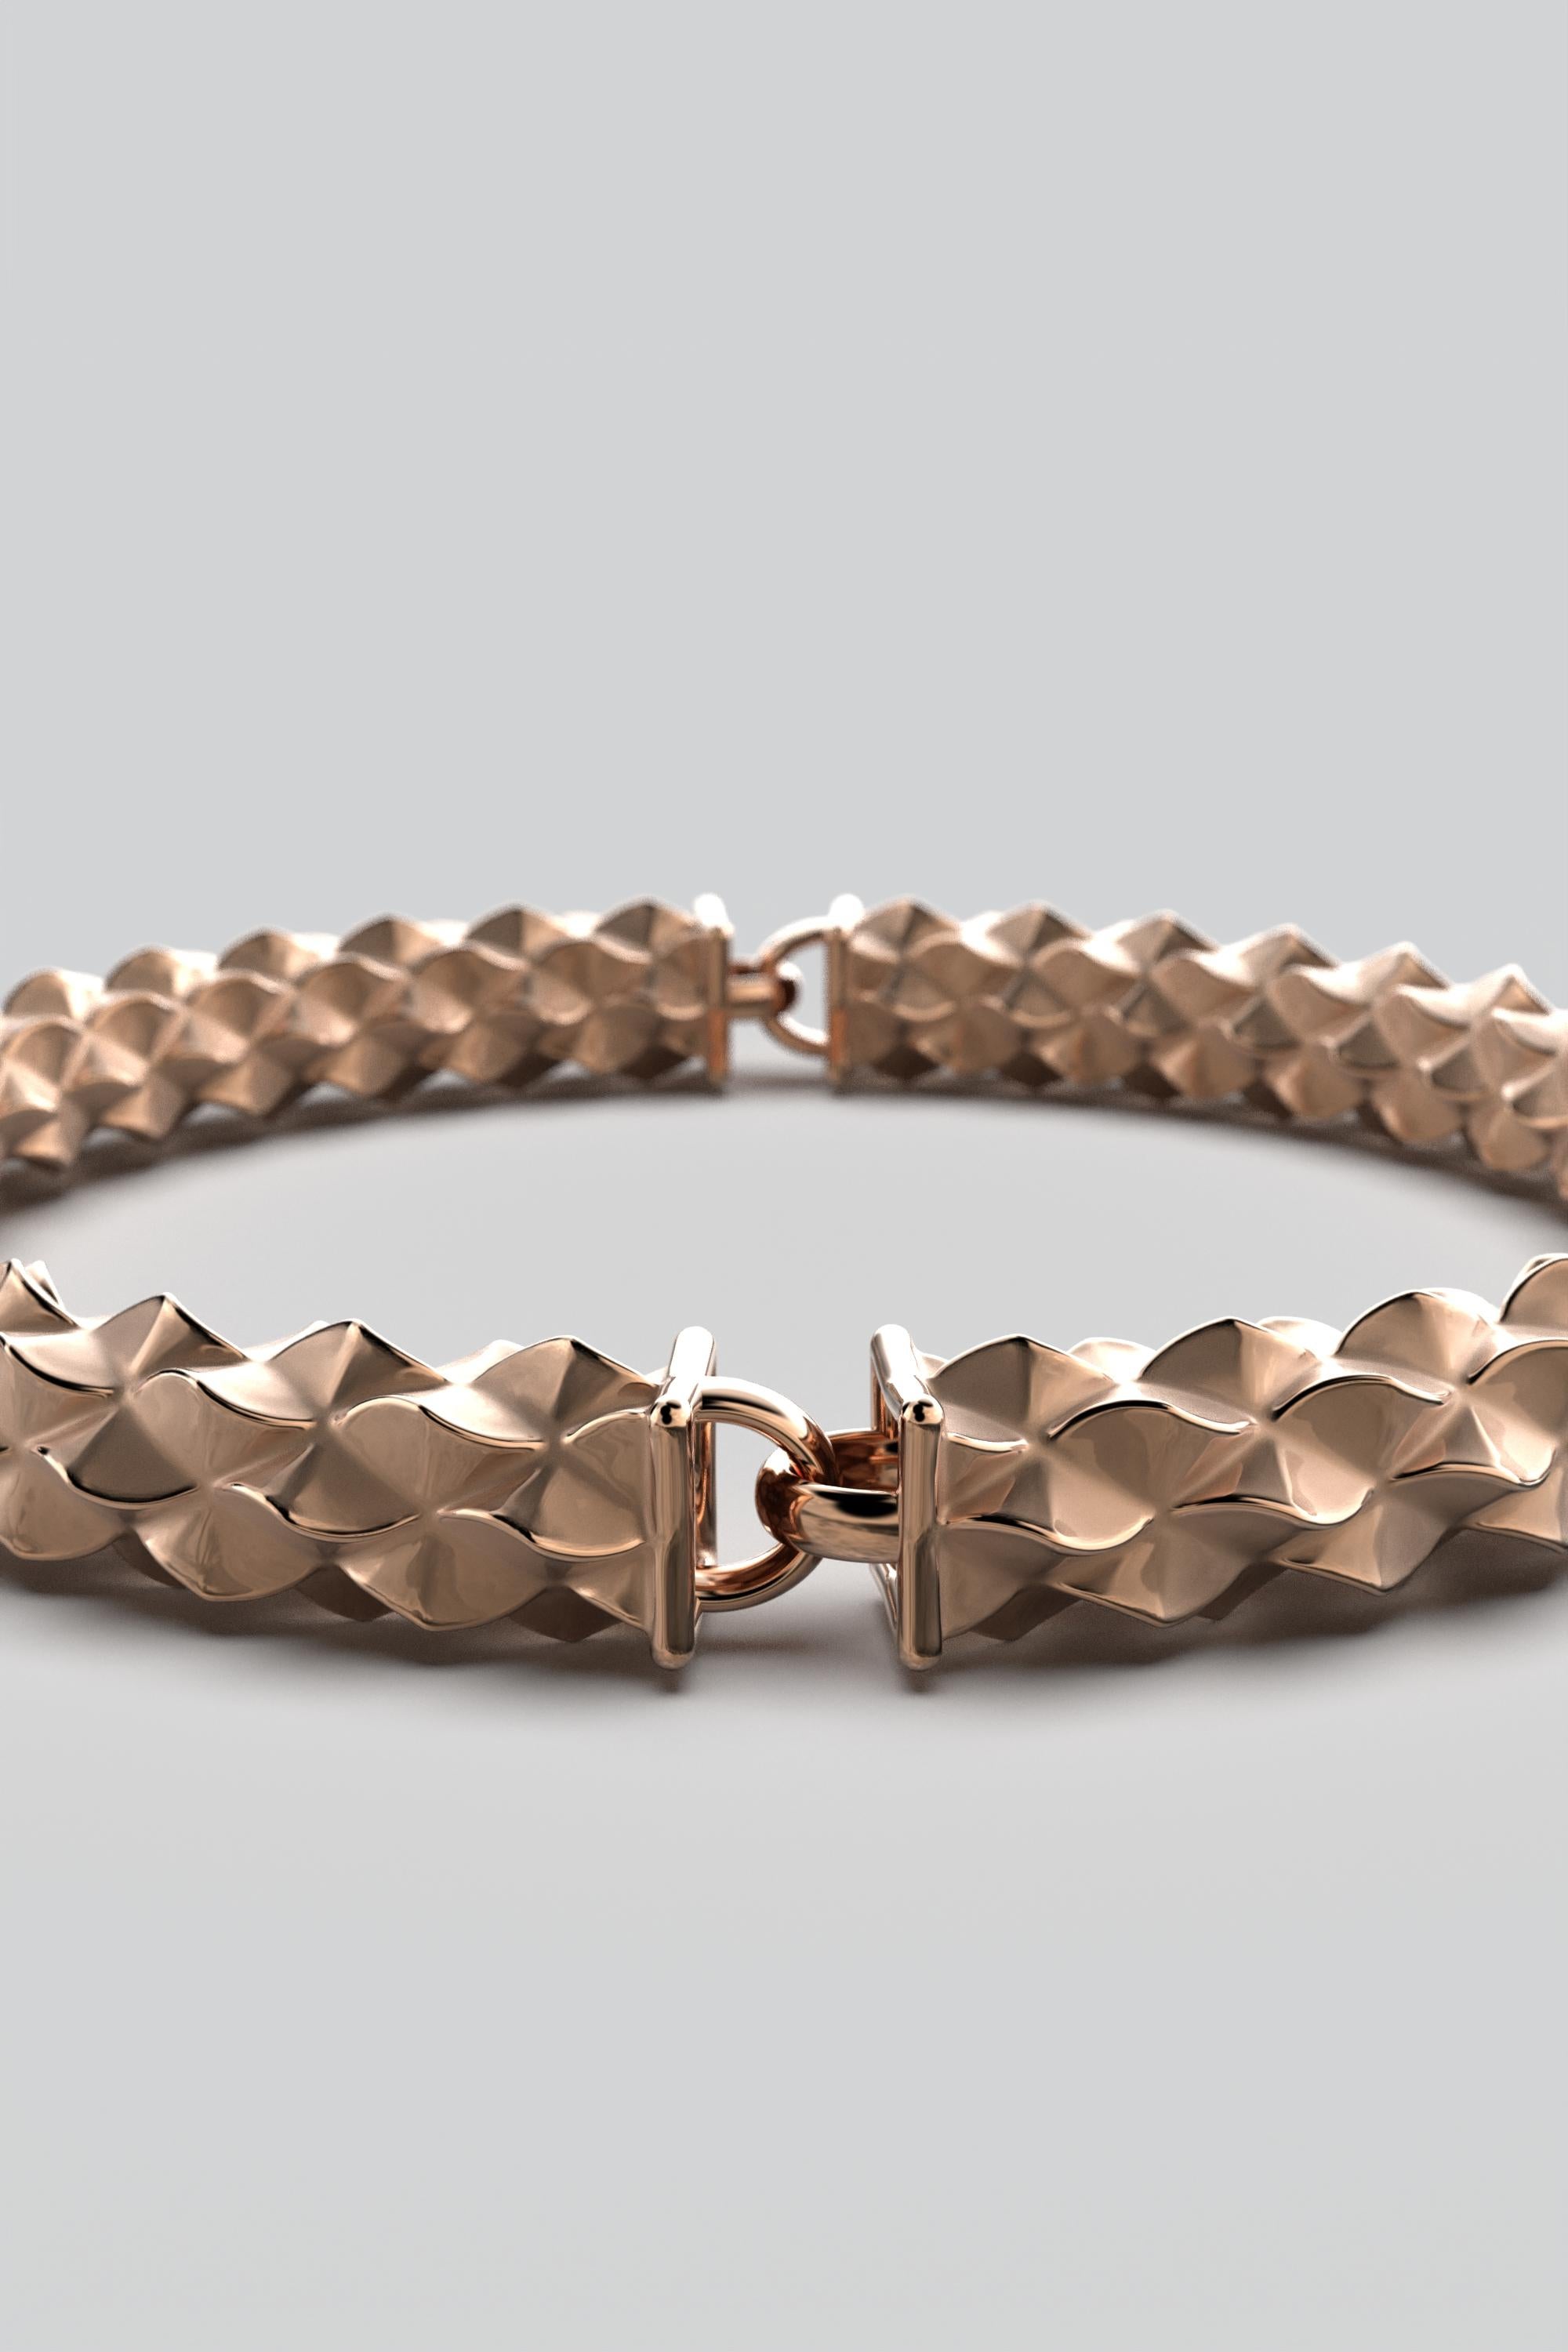 18k Italian Gold Bracelet: Custom Semi-Rigid Design by Oltremare Gioielli For Sale 6